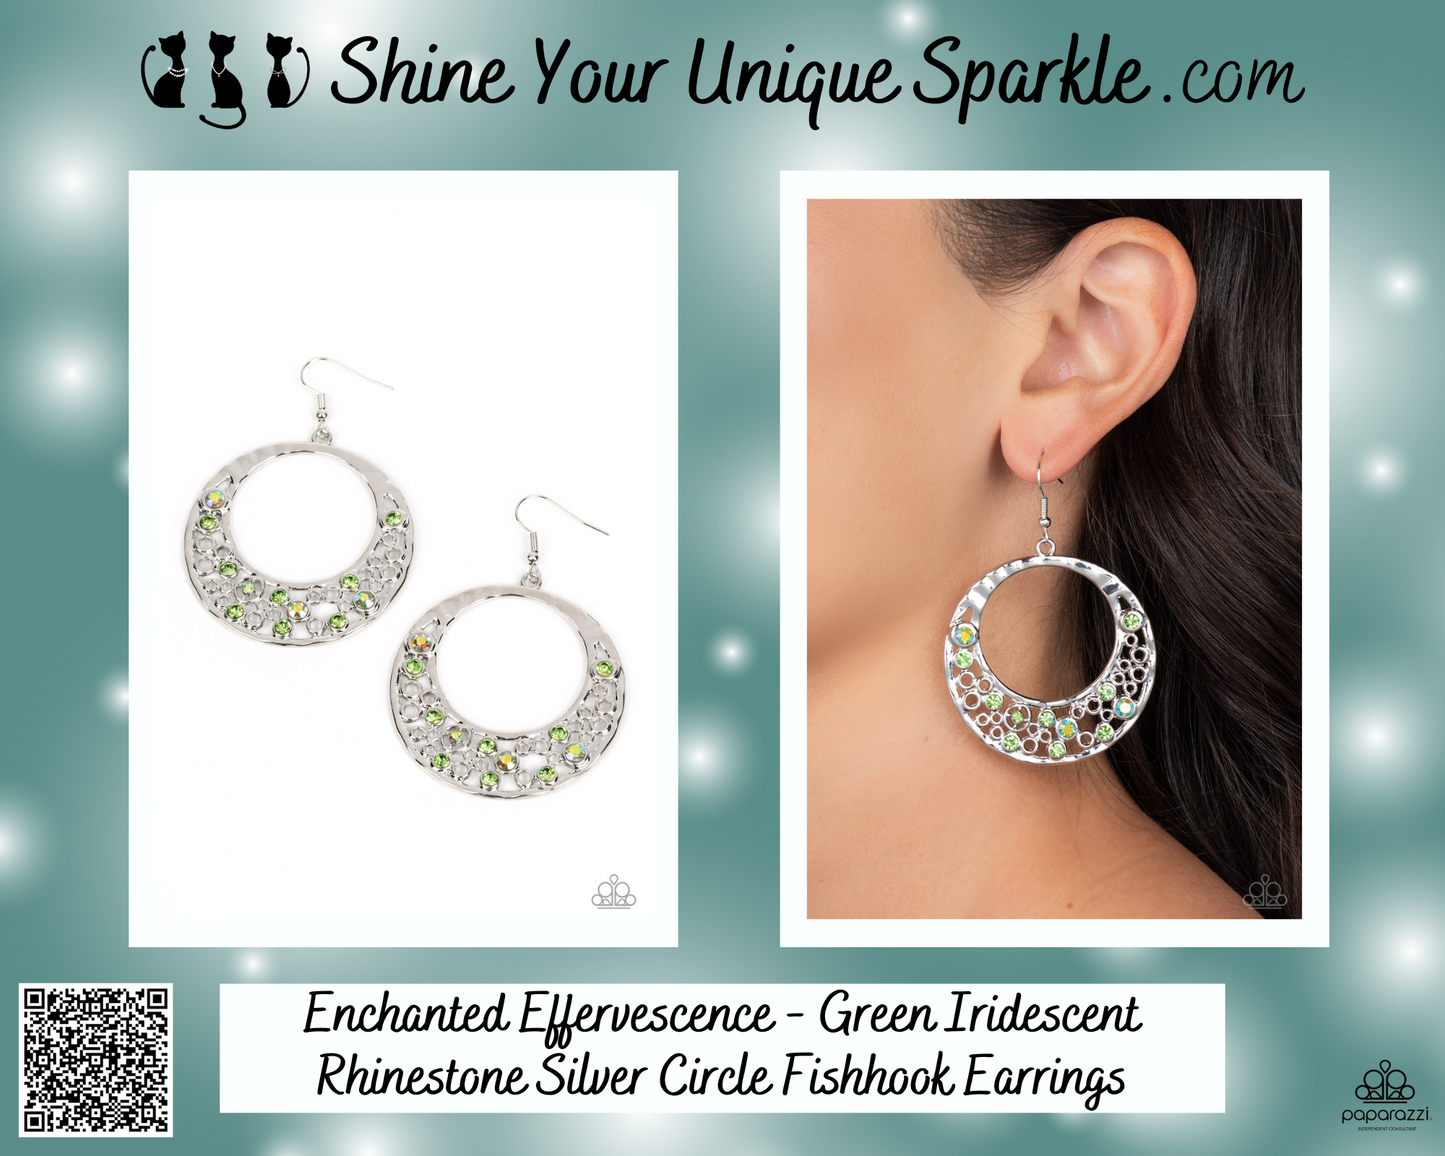 Enchanted Effervescence - Green Iridescent Rhinestone Silver Circle Fishhook Earrings